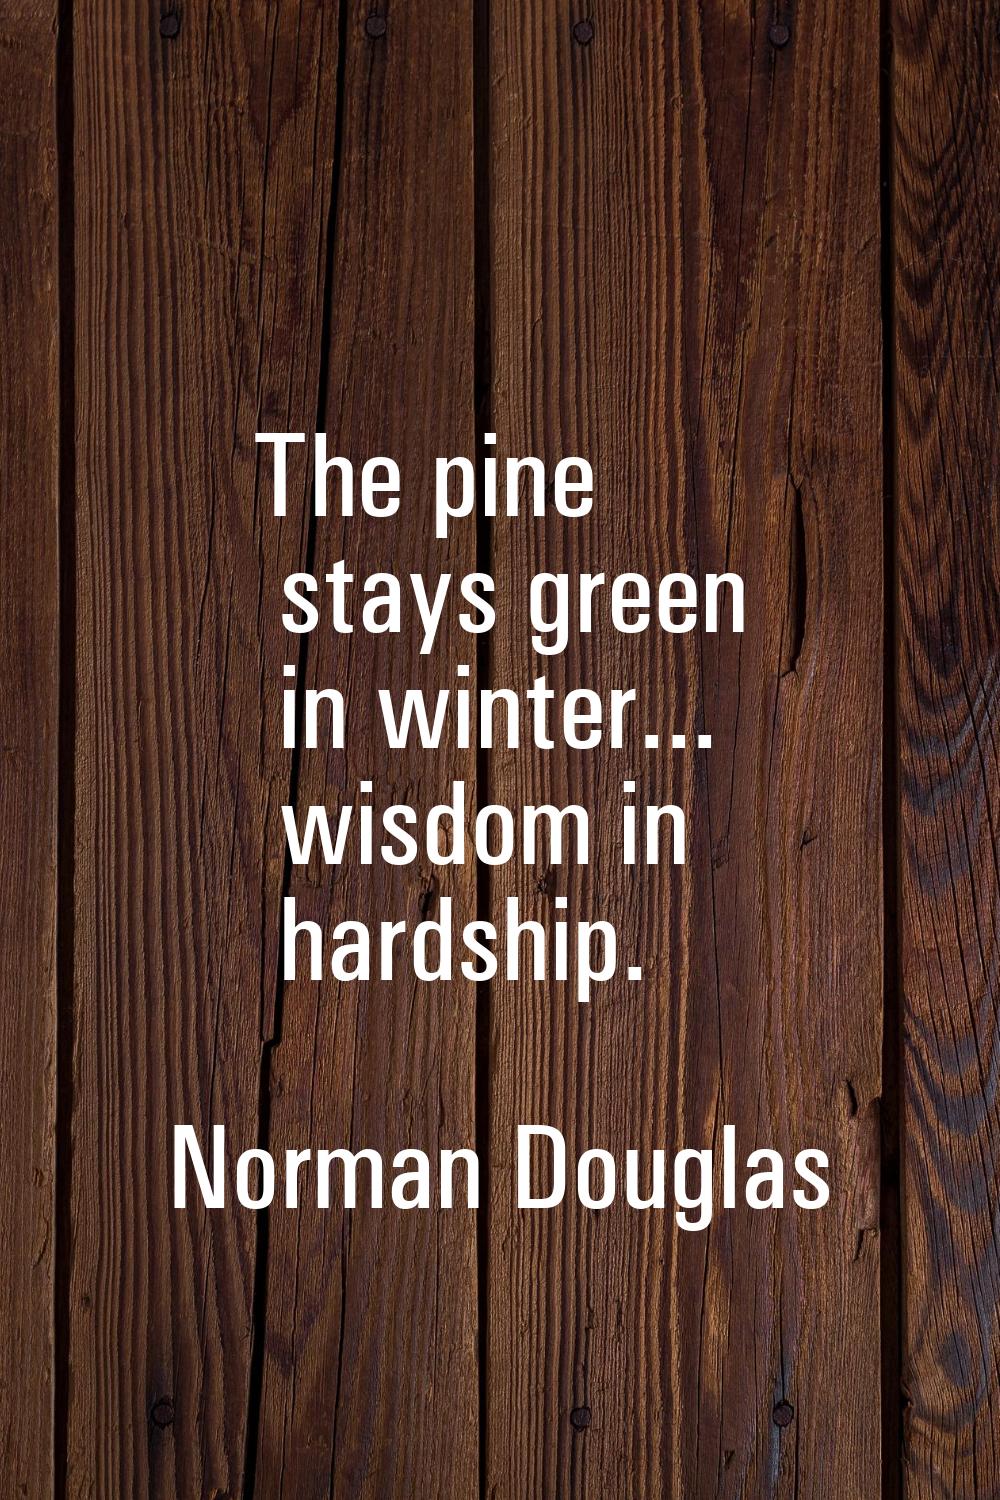 The pine stays green in winter... wisdom in hardship.